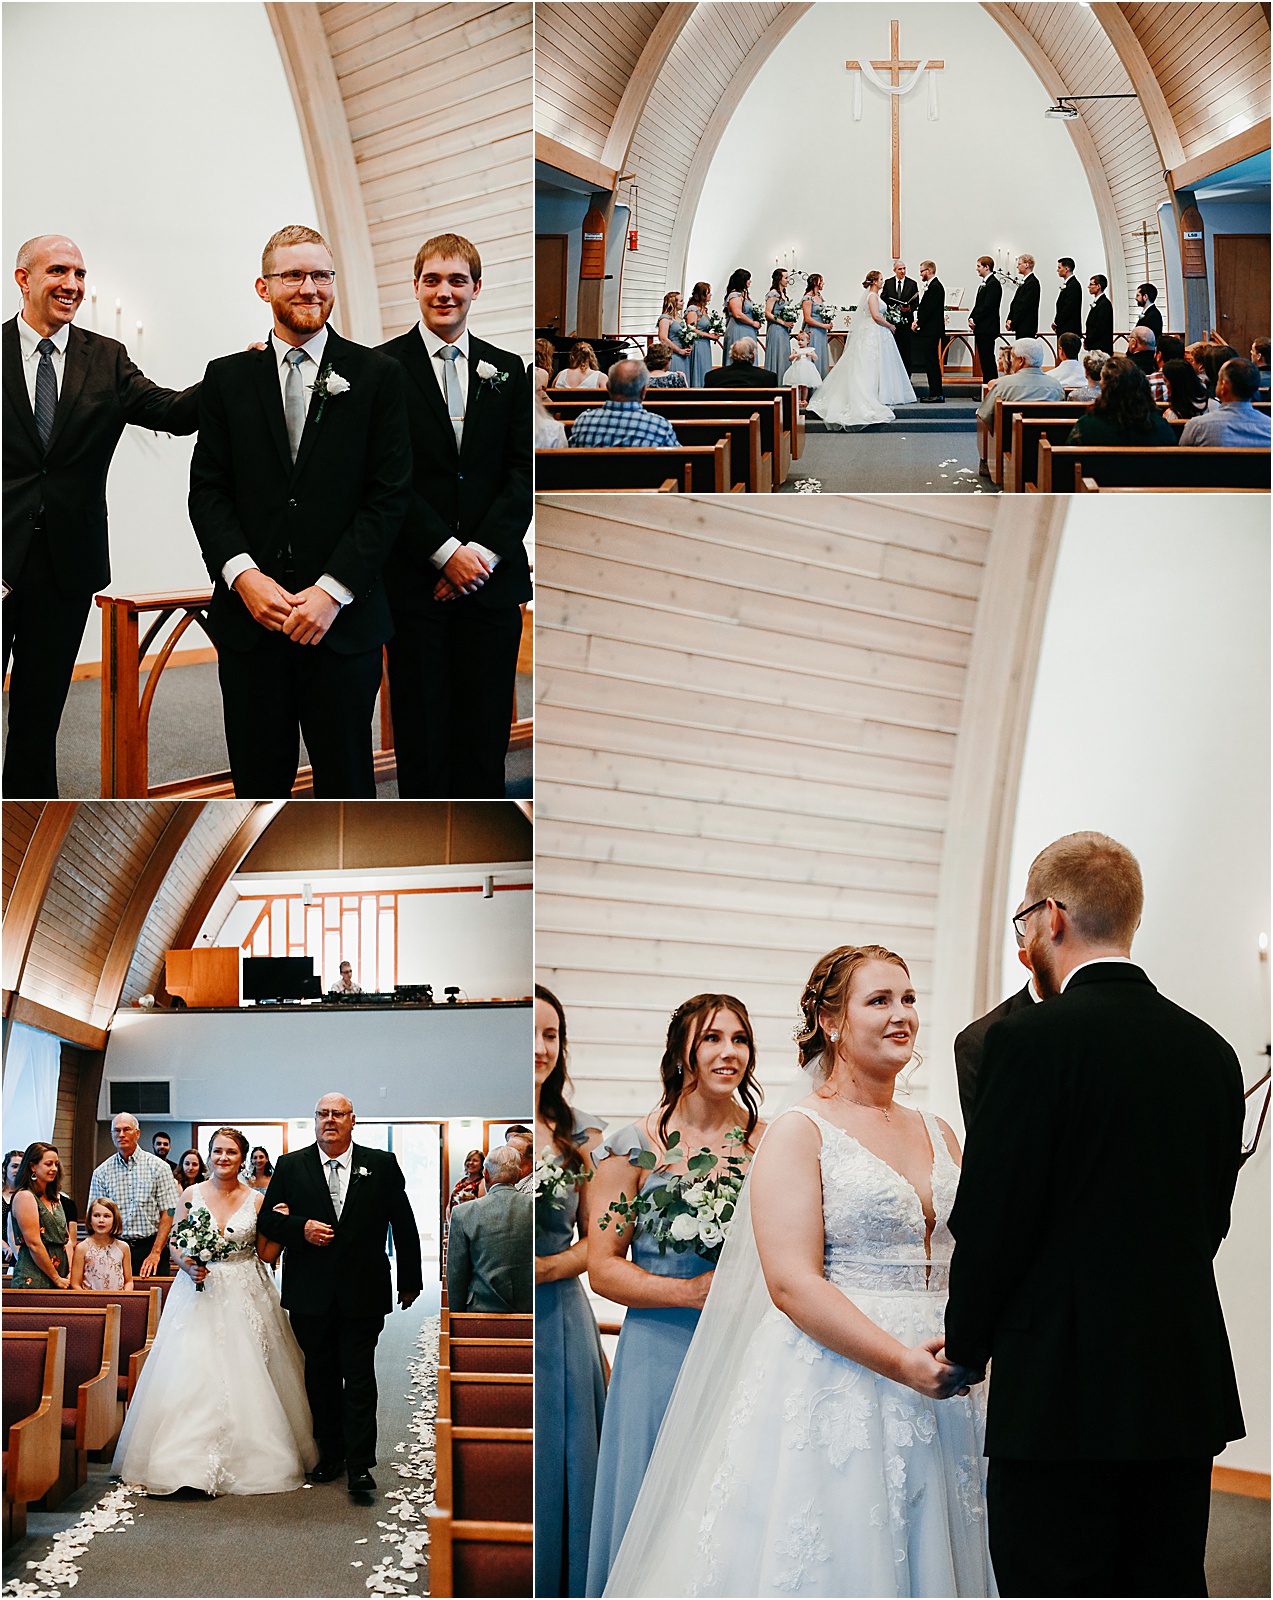 Summer Small Church Wedding // Spokane WA